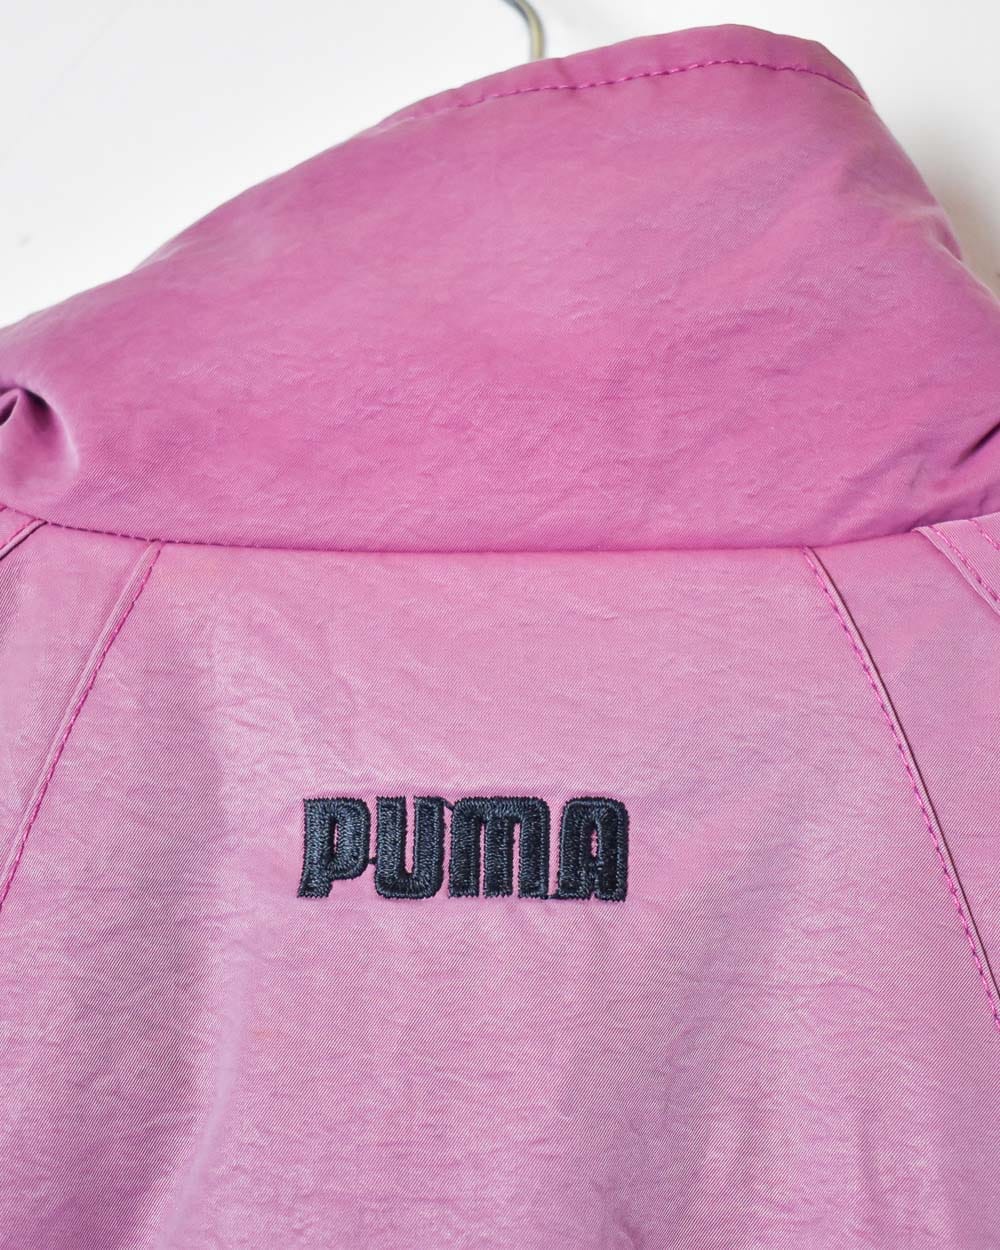 Purple Puma Windbreaker Jacket - Medium Women's